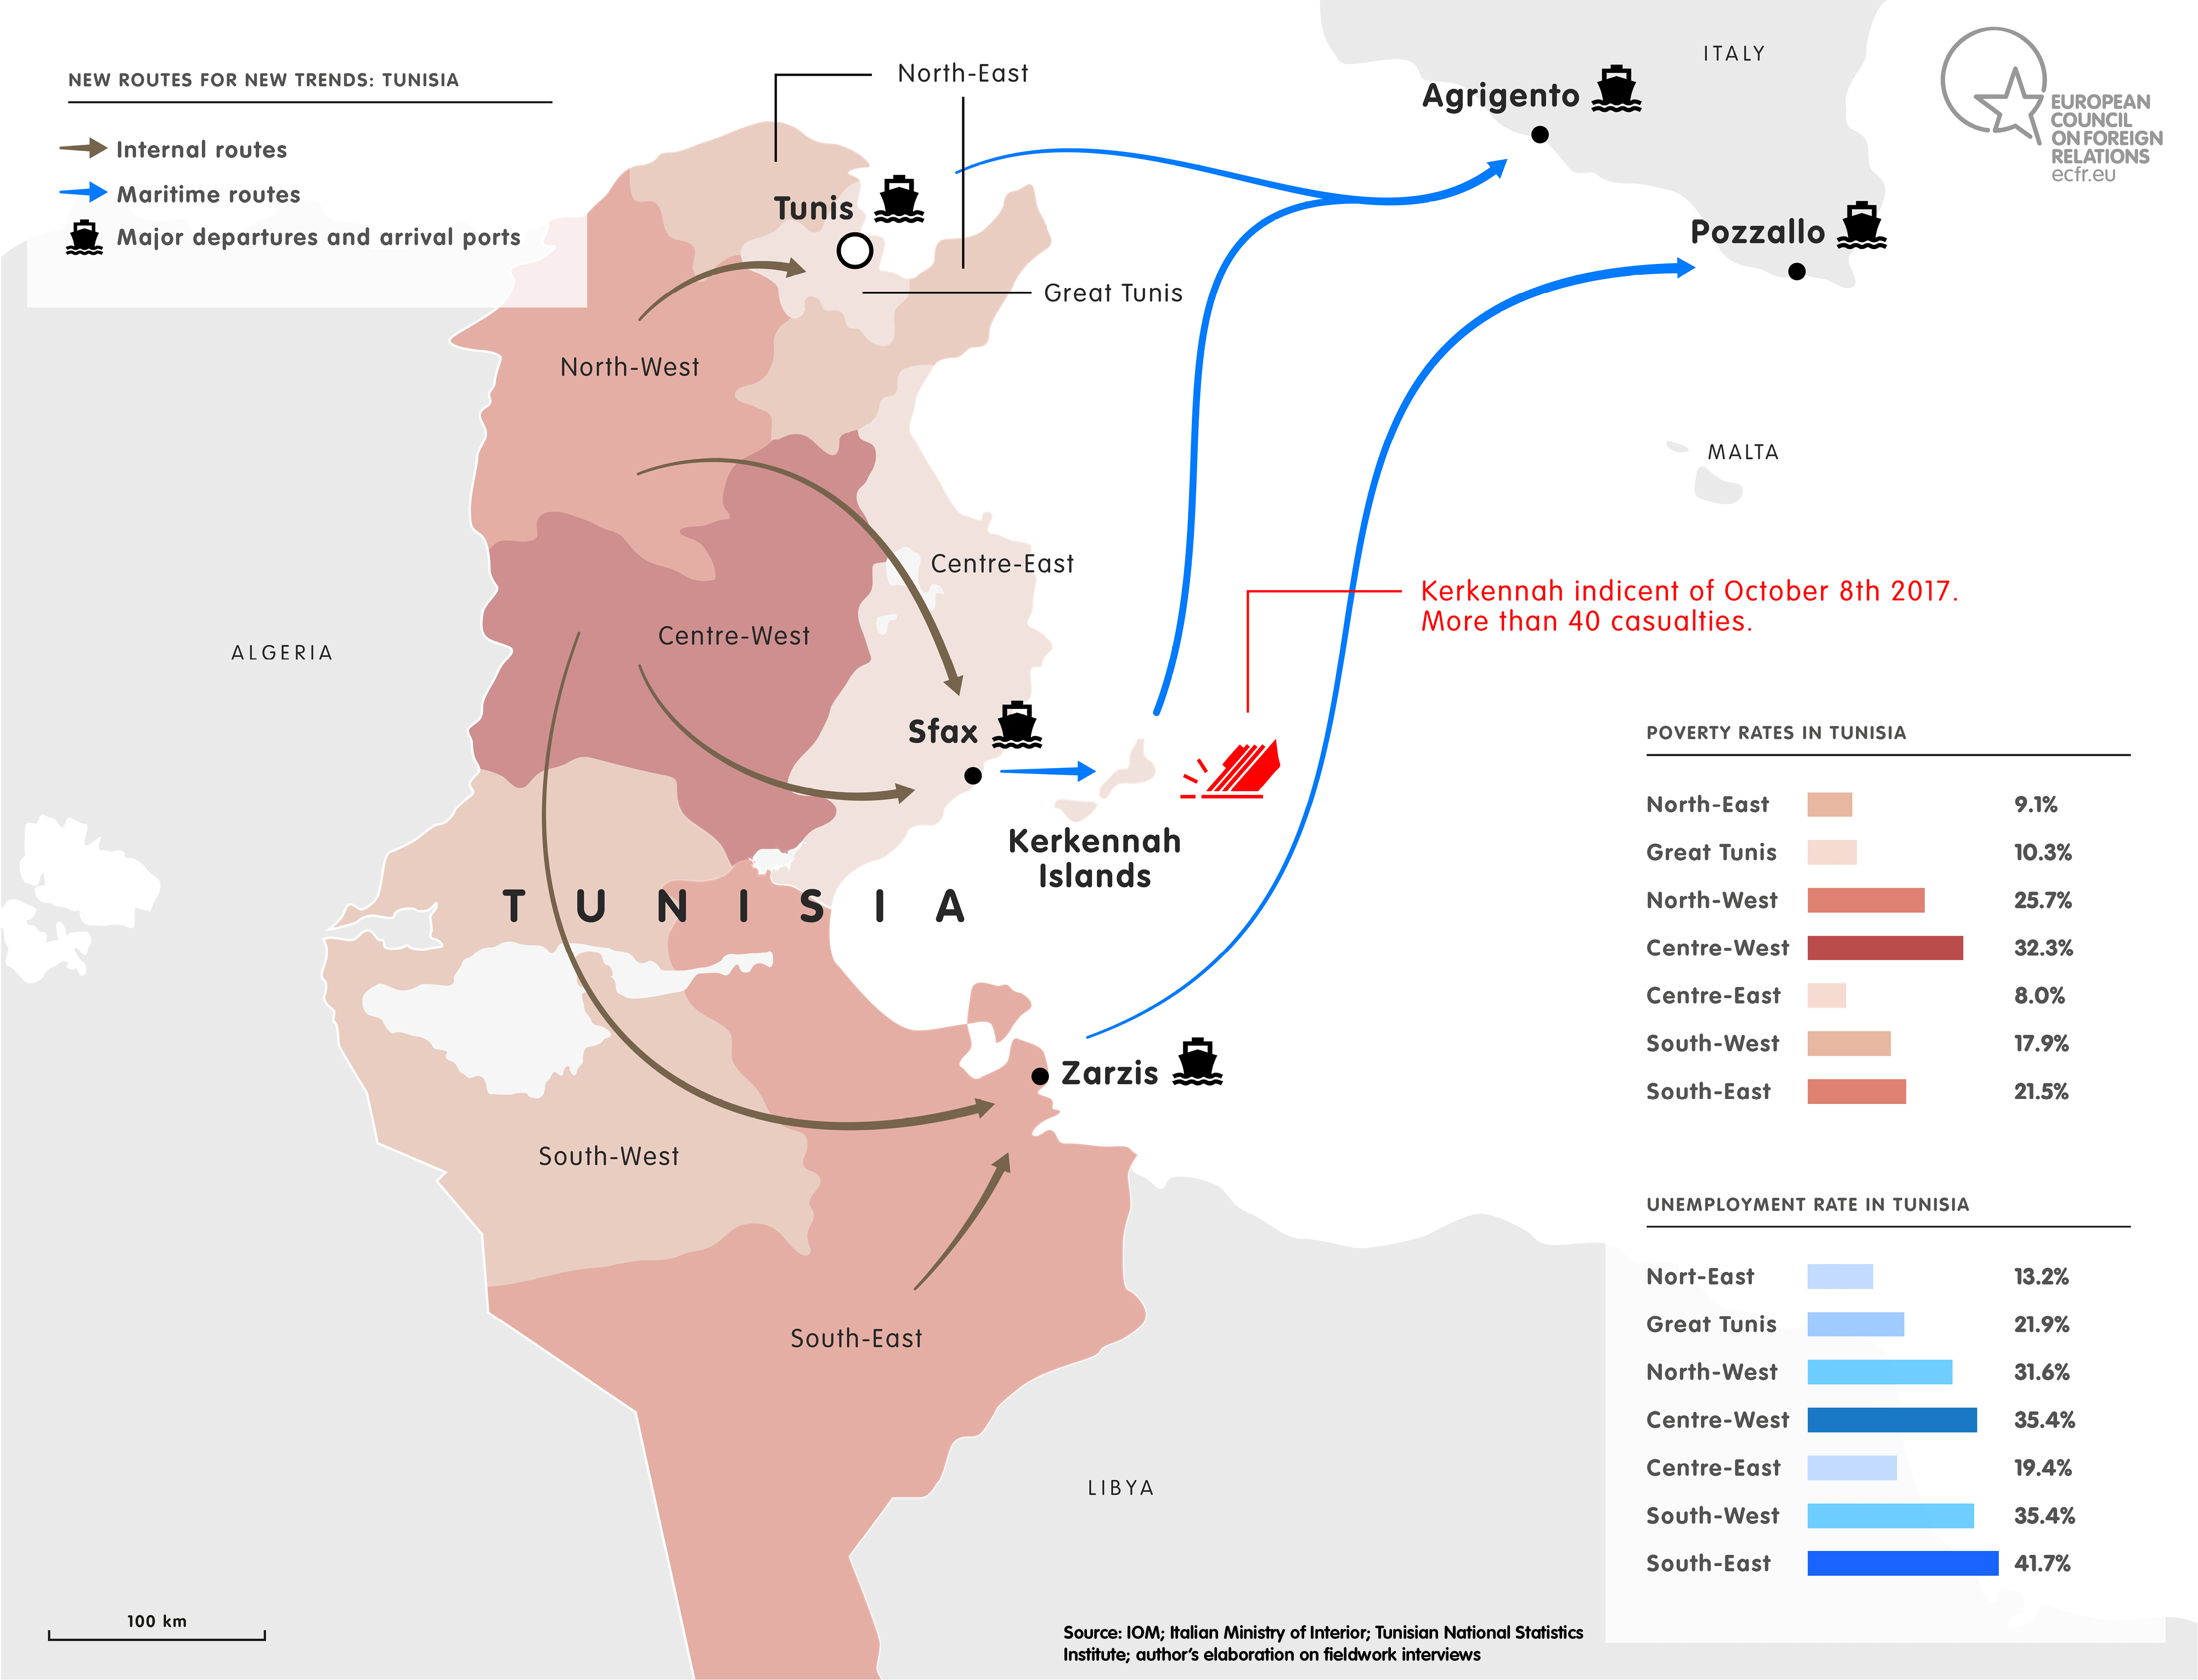 Tunisia's internal migration routes map